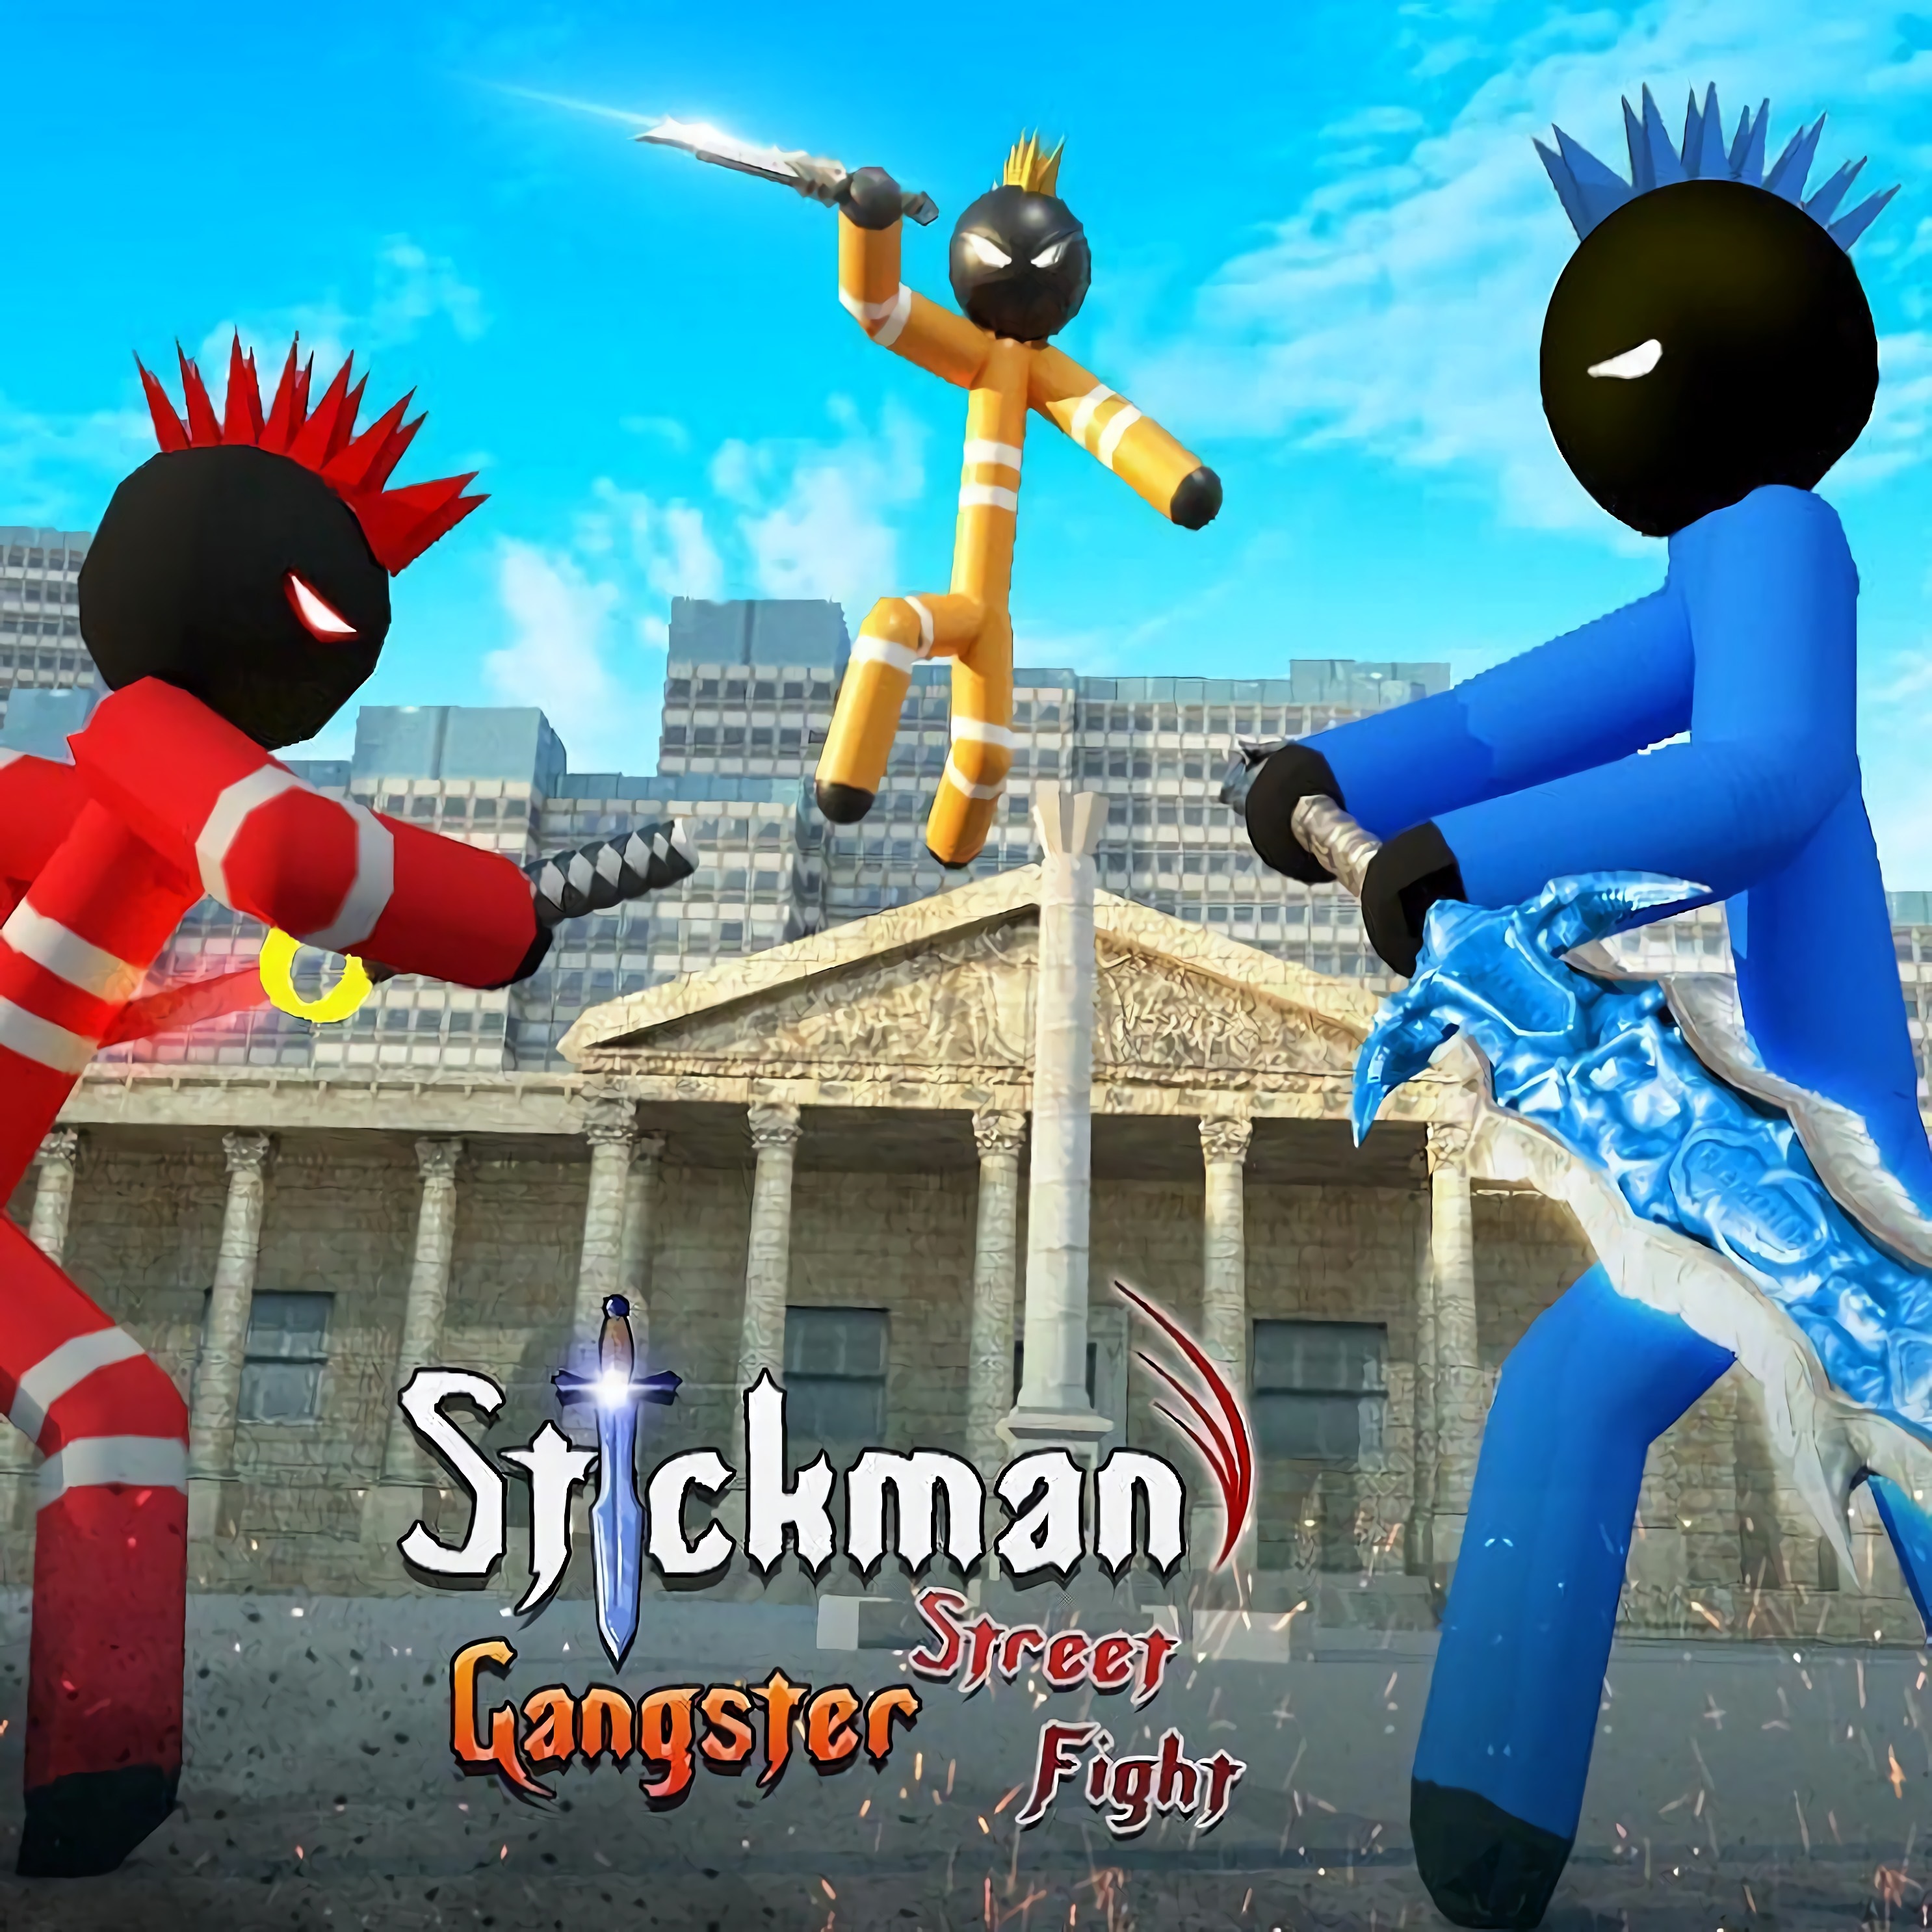 Stickman Street Fighting